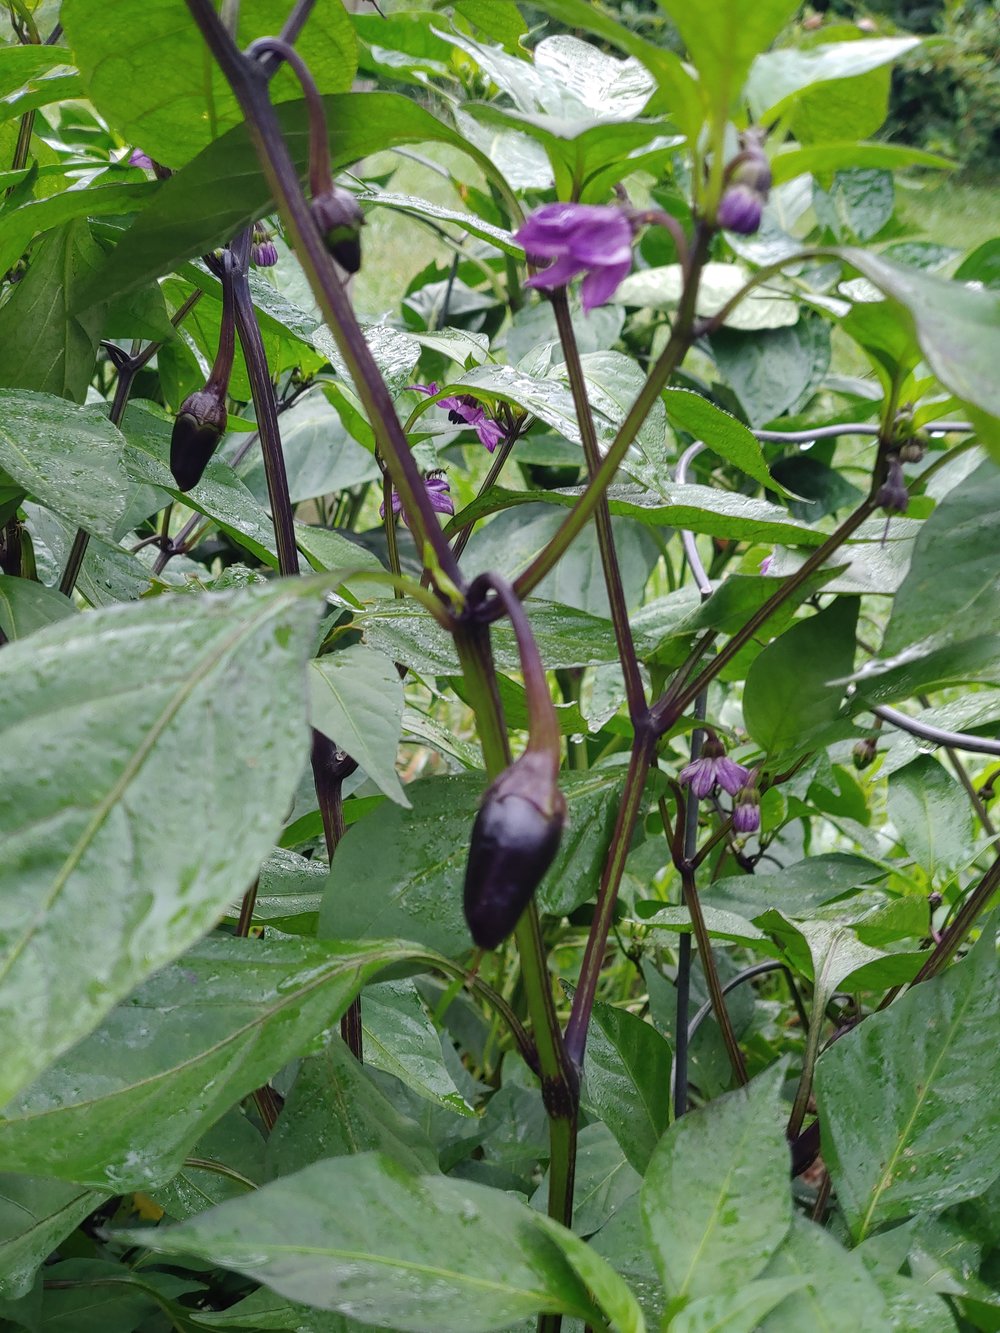 Black Hungarian hot peppers